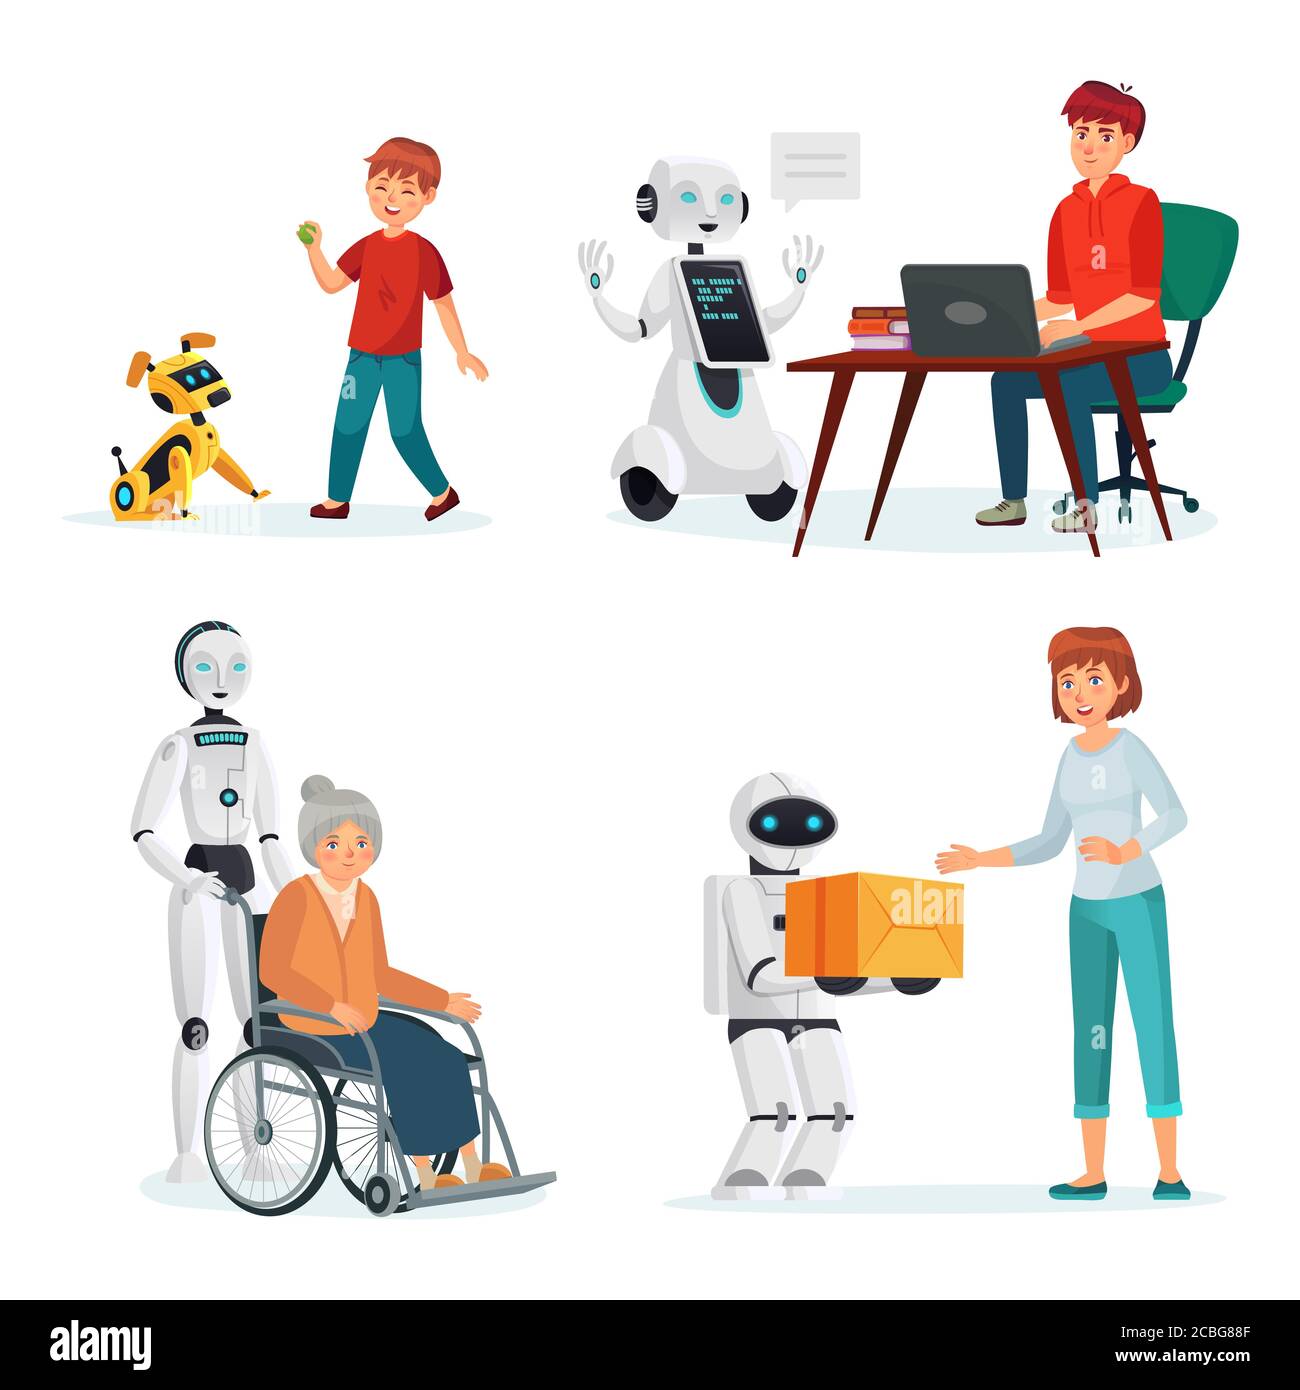 Les robots interagissent avec les gens dans diverses situations Illustration de Vecteur